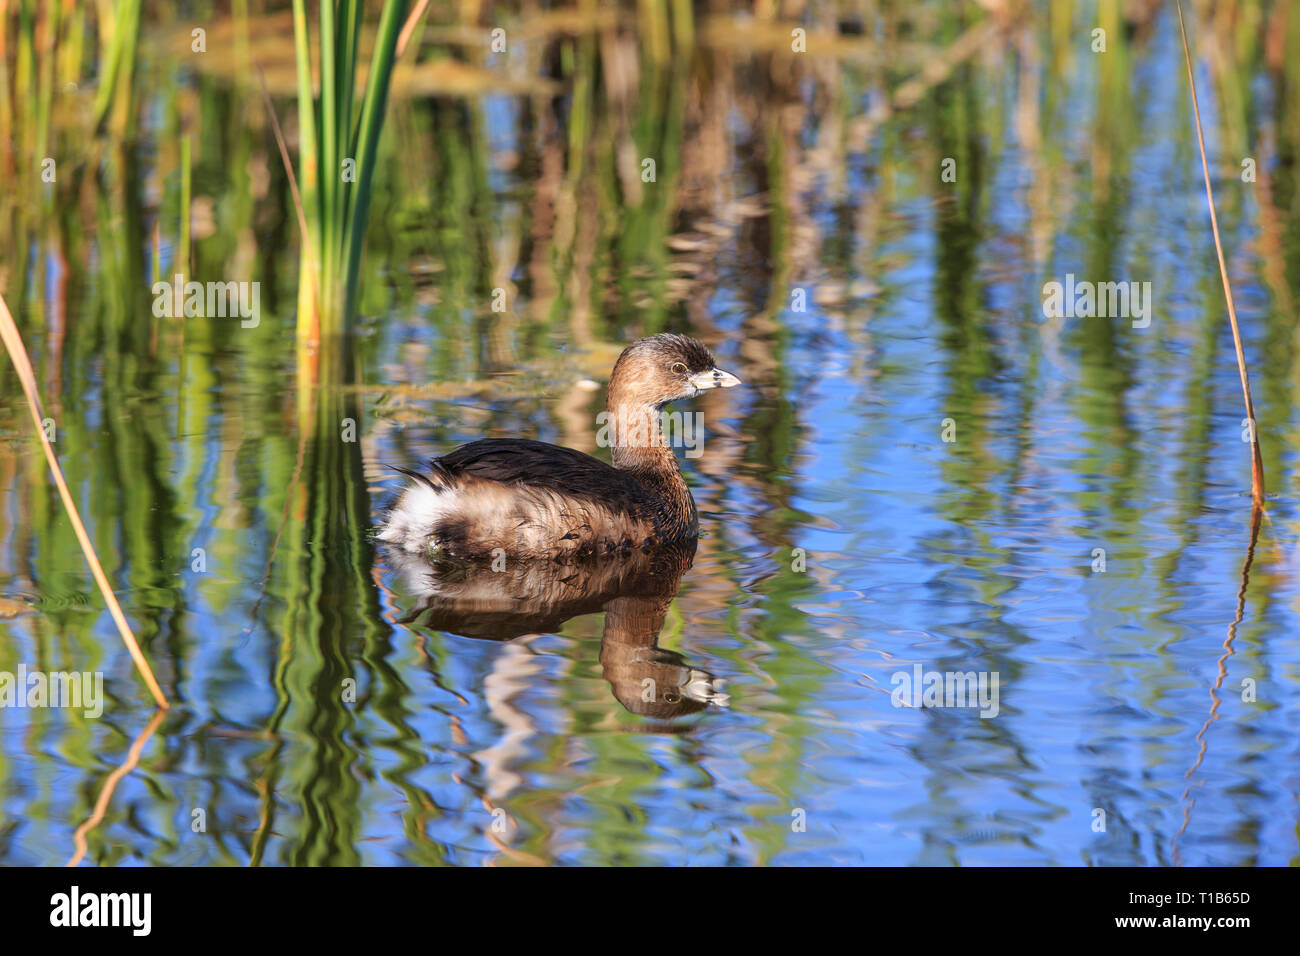 Pied-billed grebe (Podilymbus podiceps) swimming in reeds Stock Photo